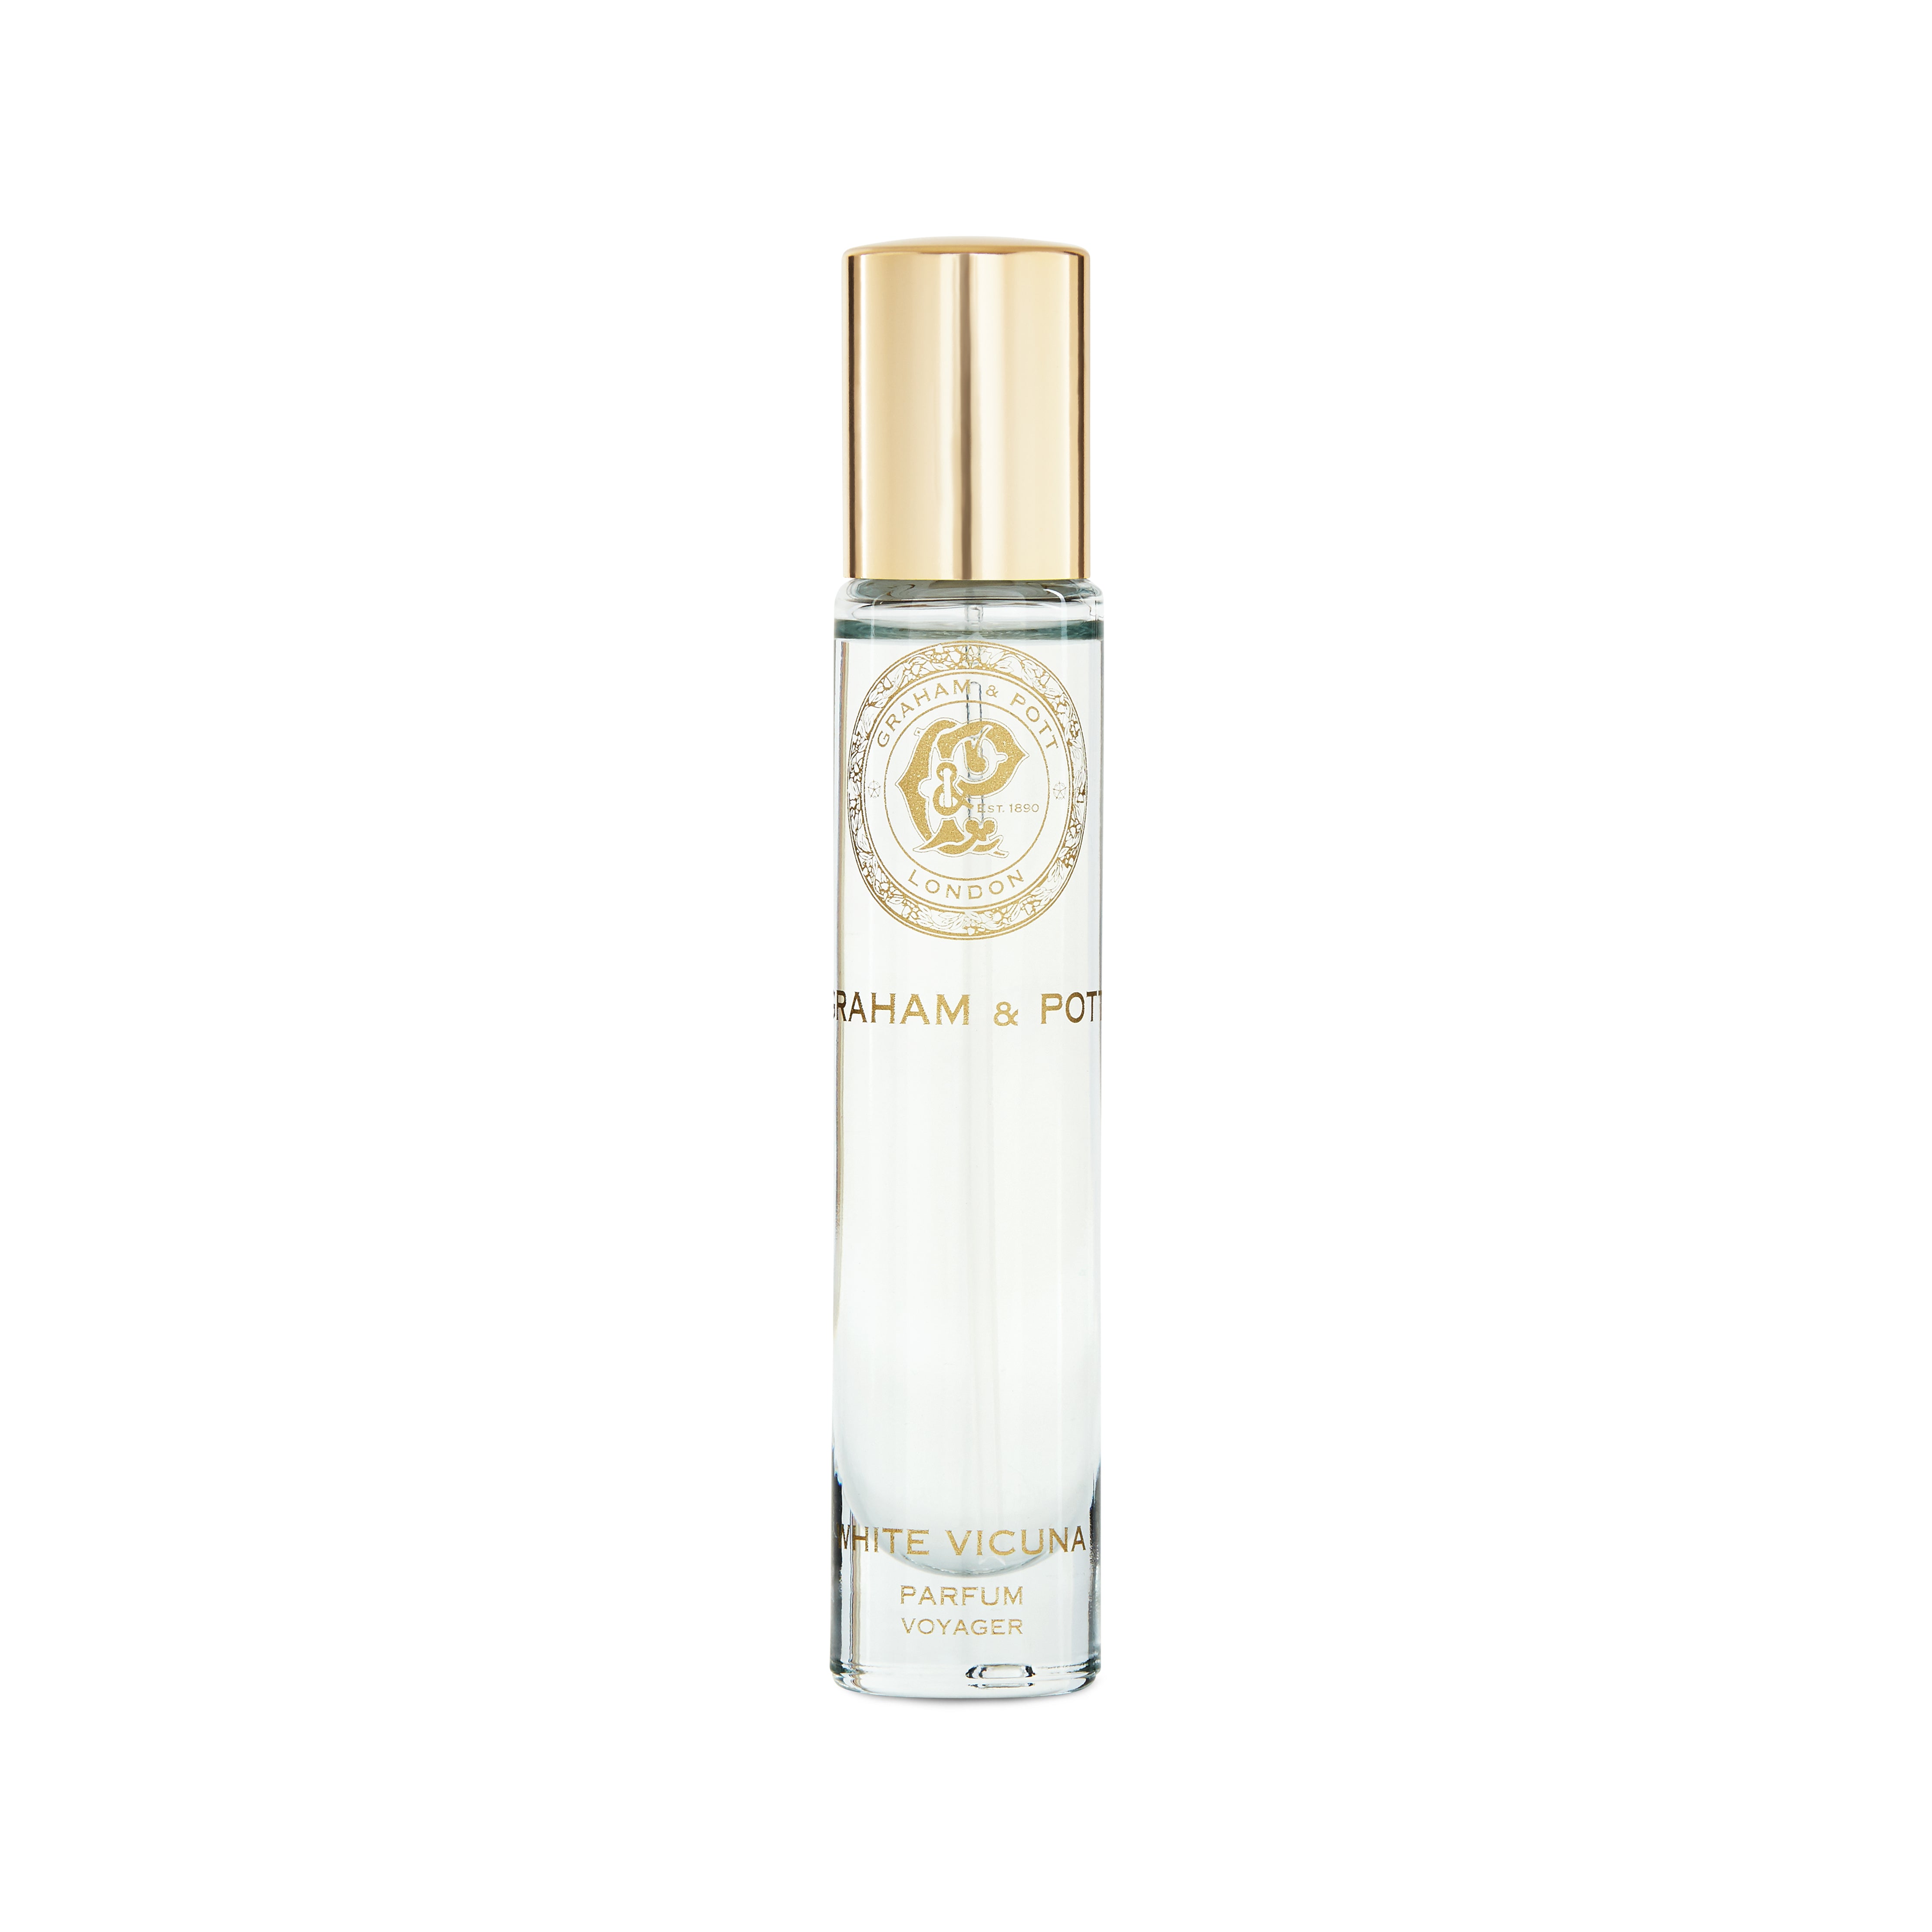 WHITE VICUNA Parfum Voyager - GRAHAM & POTT